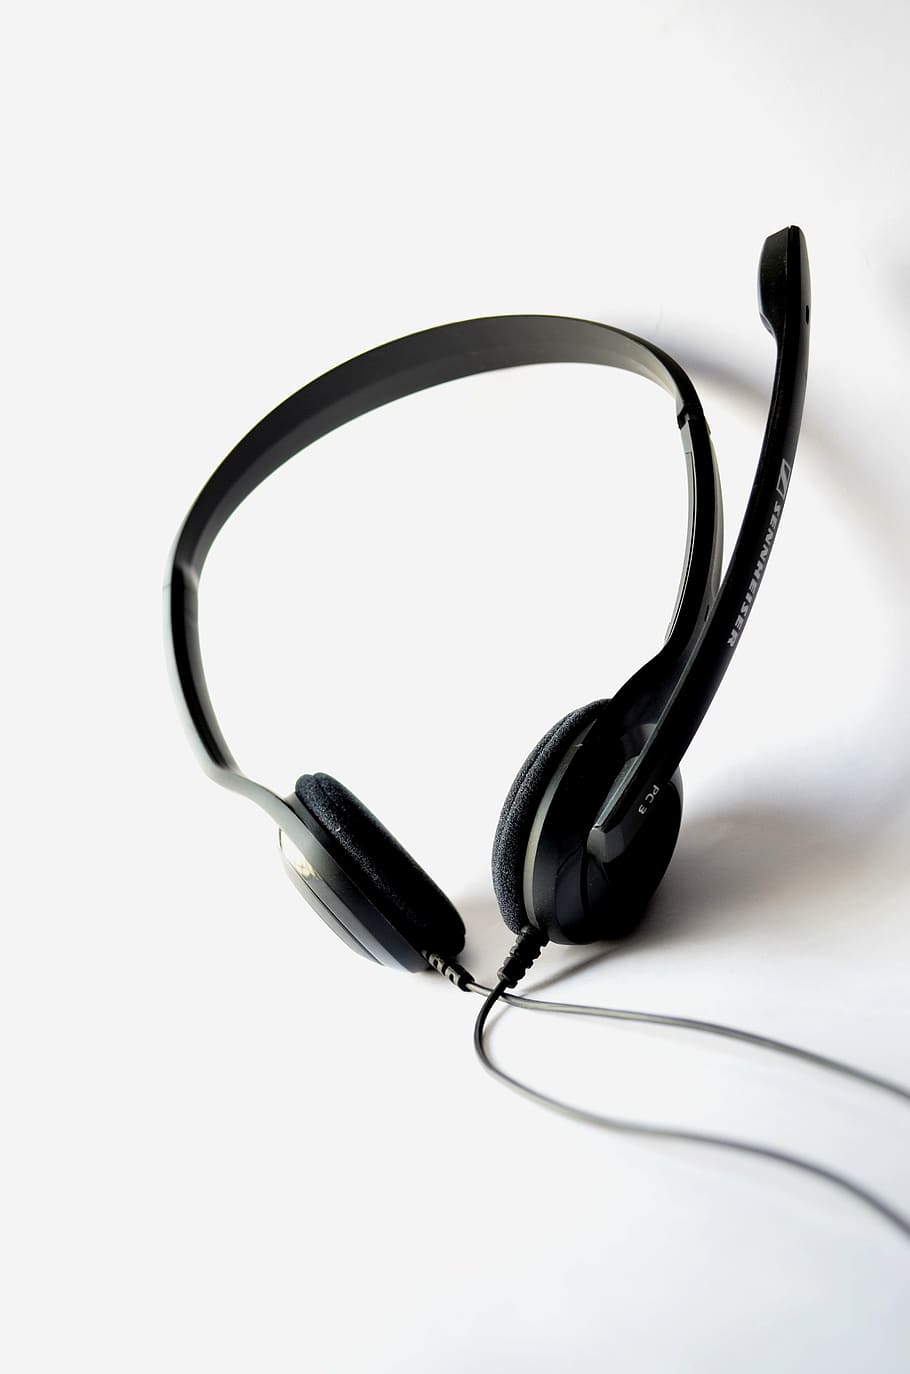 black corded headphones, headphones, mic, headset, microphone, audio, technology, communication, broadcast, voice